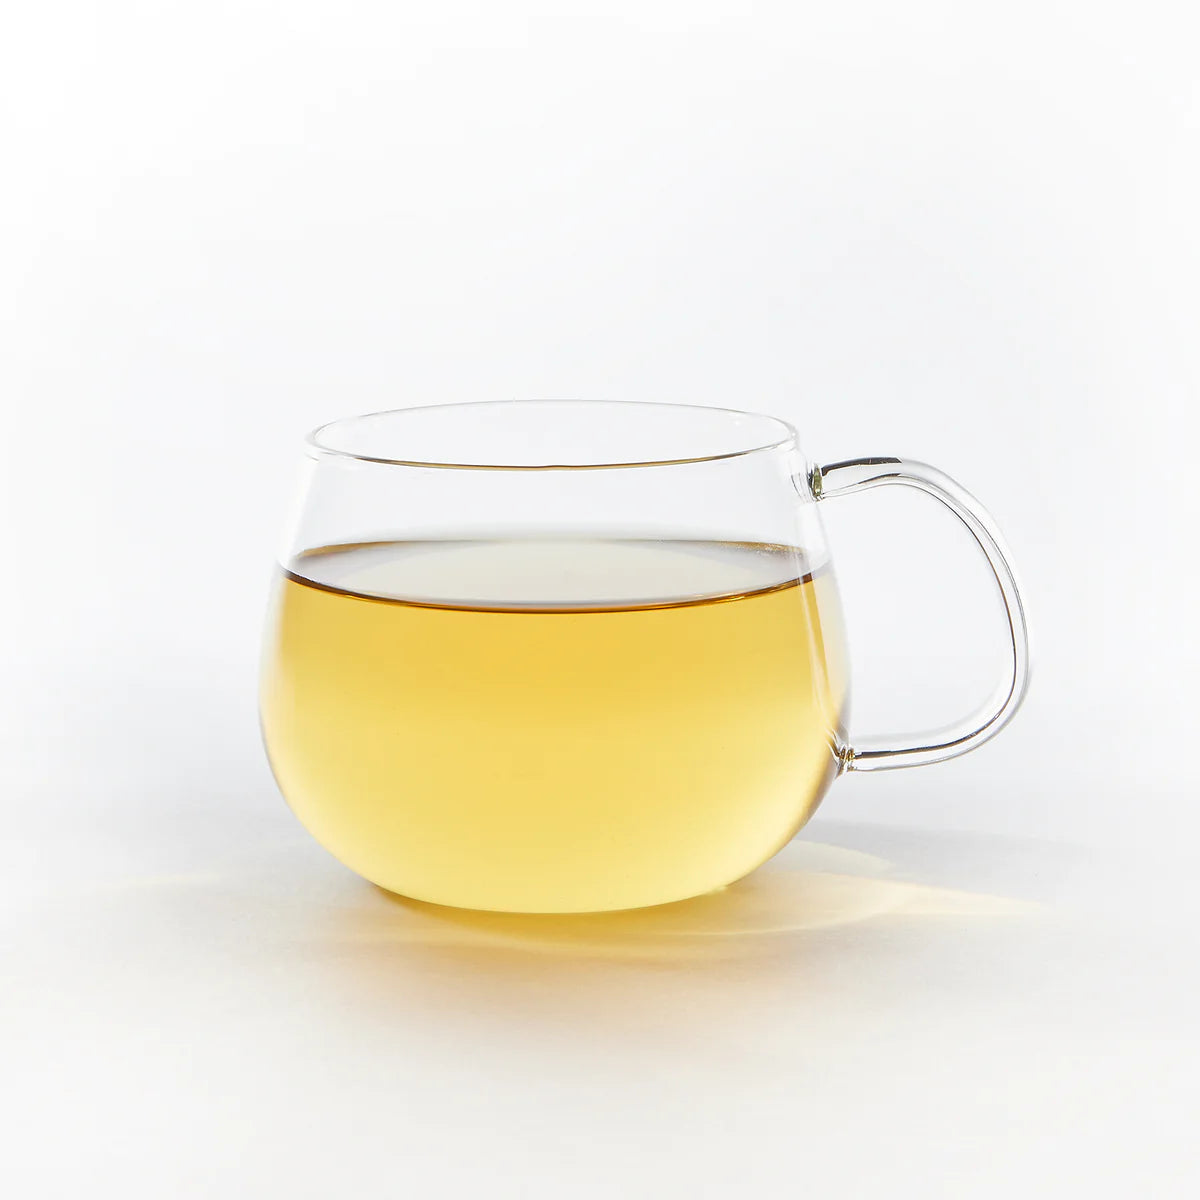 Peppermint Detox Stand-up Pouch - Fair-Trade Herbal Tea